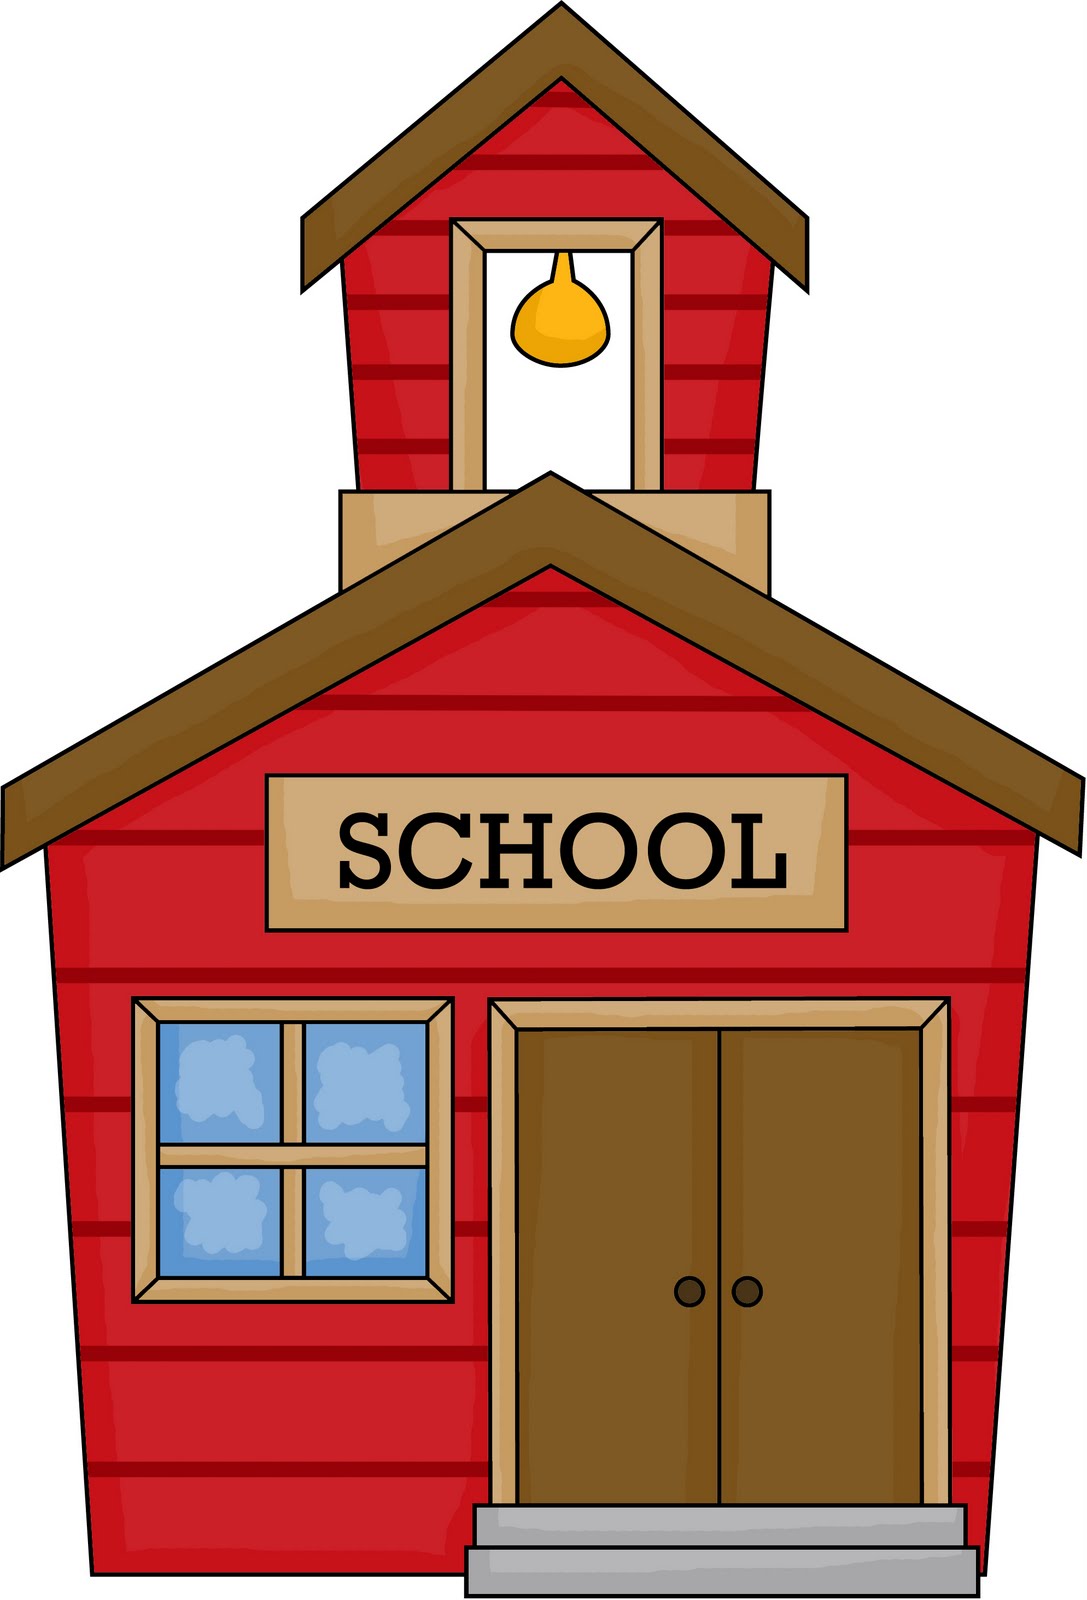 school house images - School Clipart